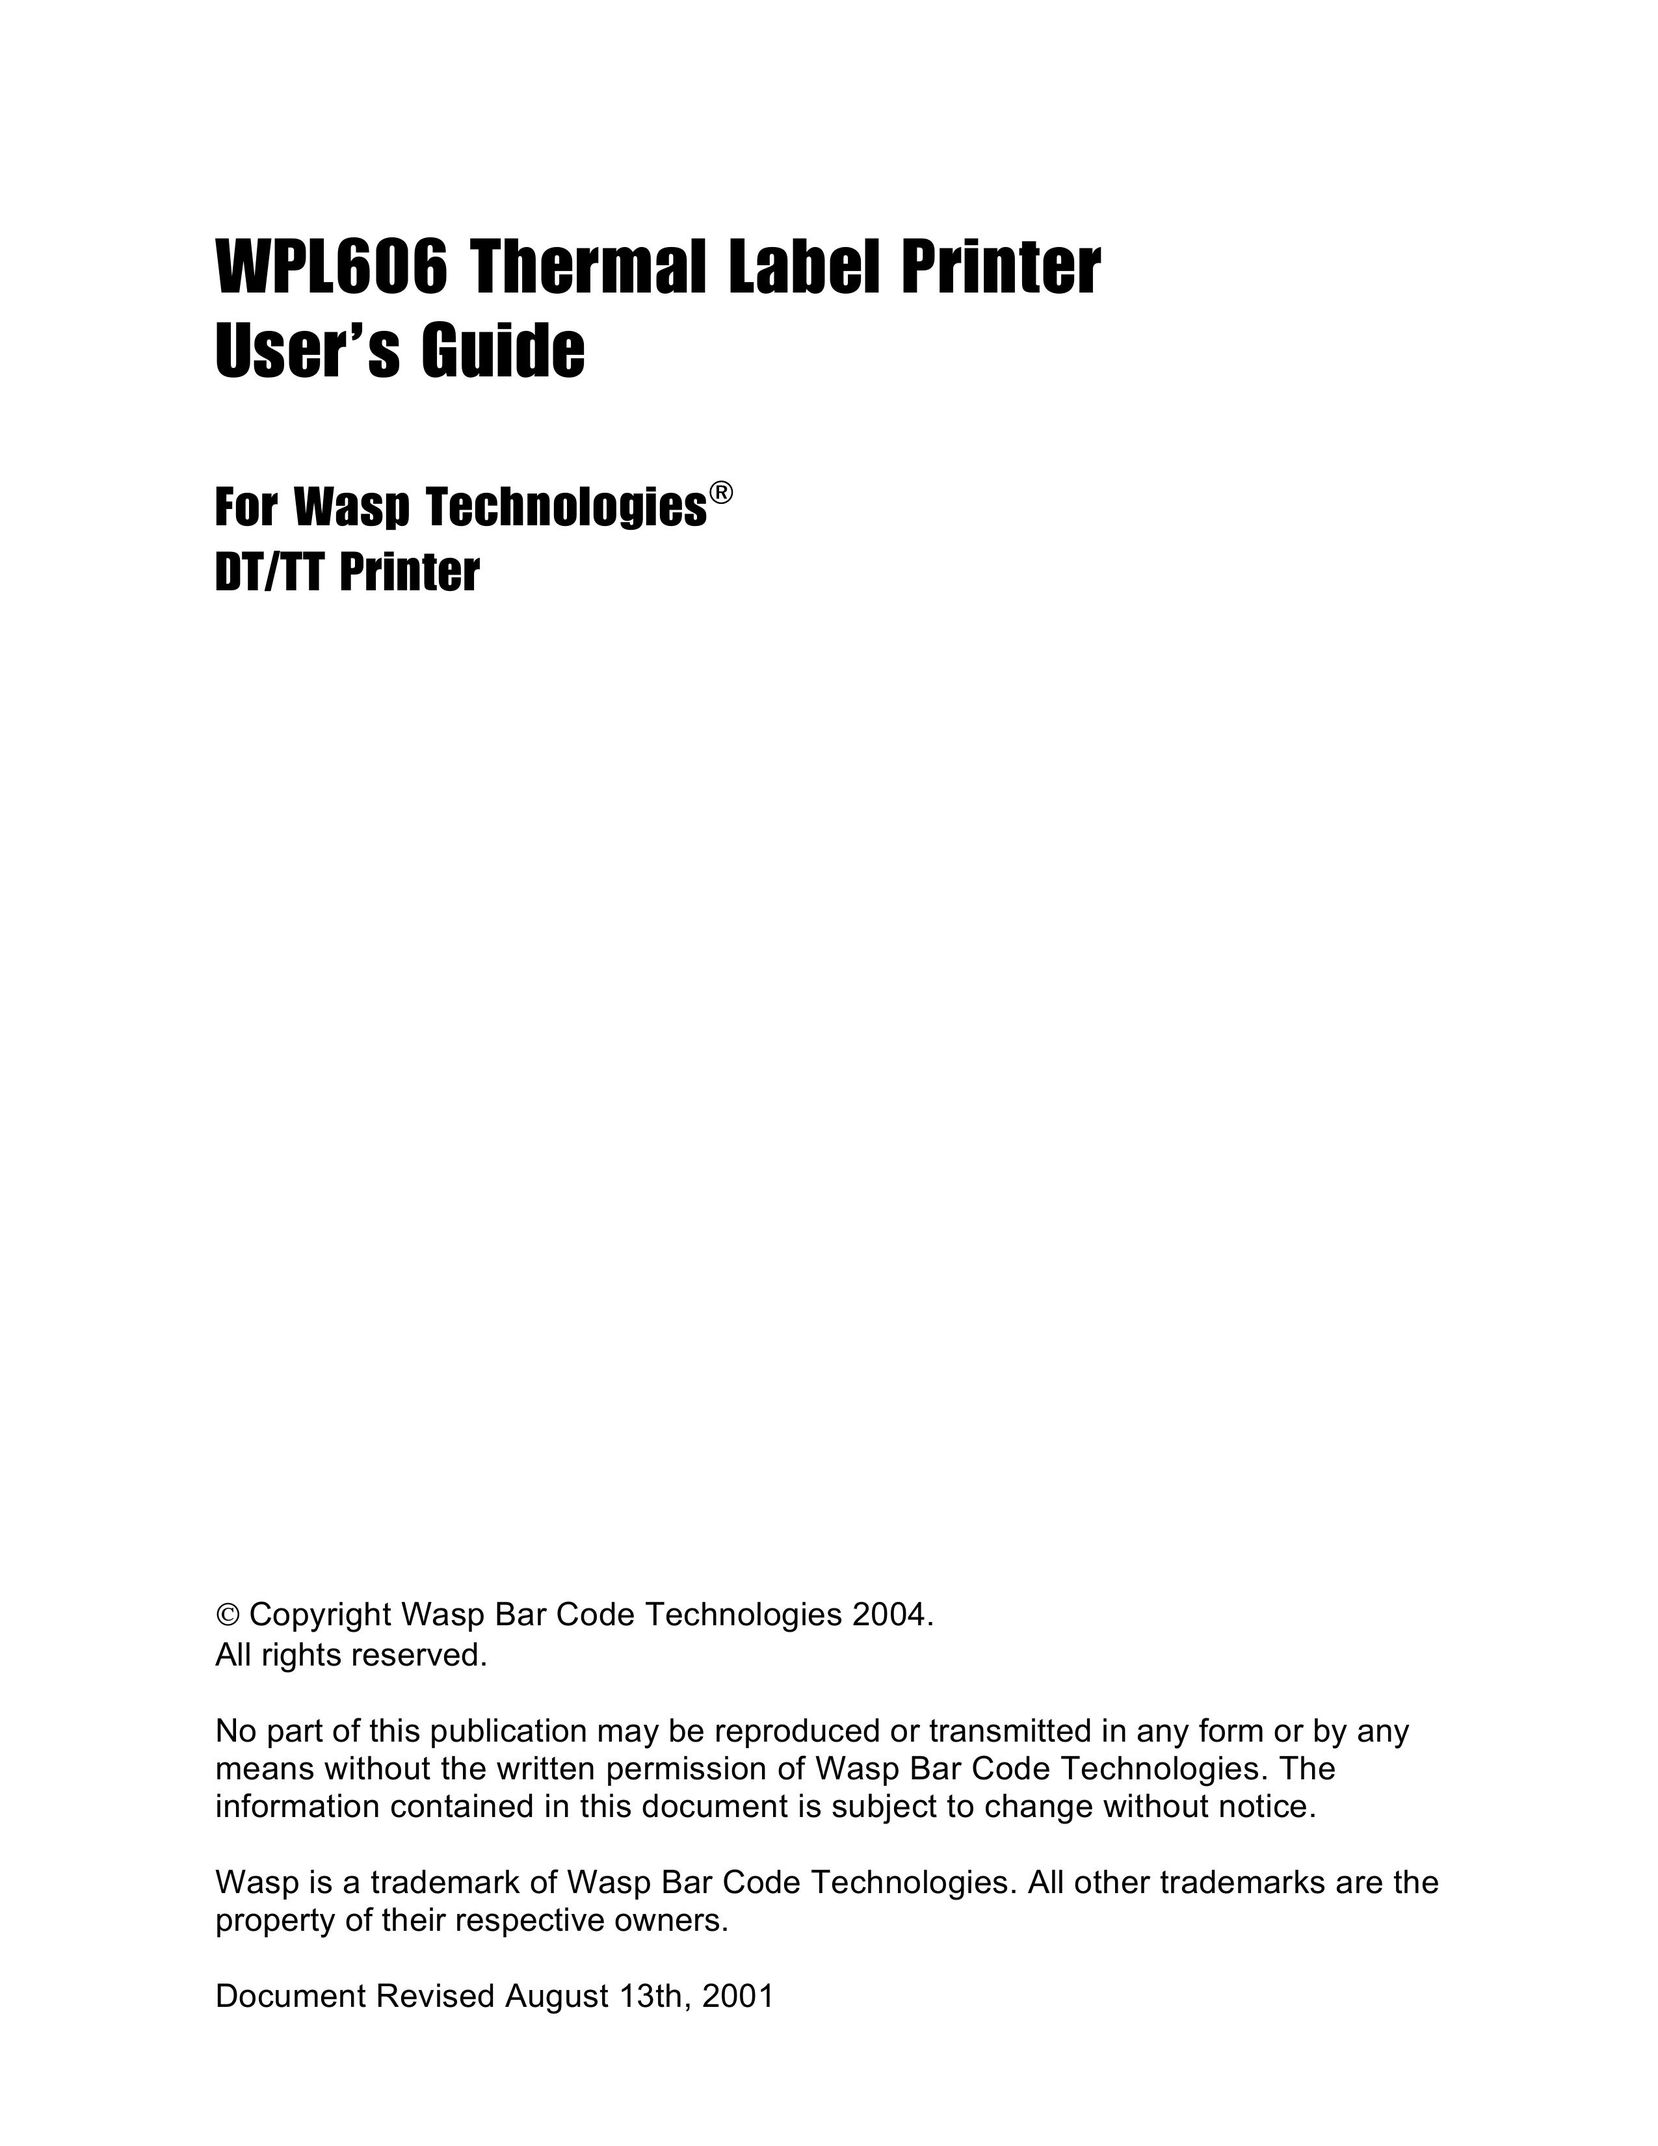 Wasp Bar Code WPL606 Printer User Manual